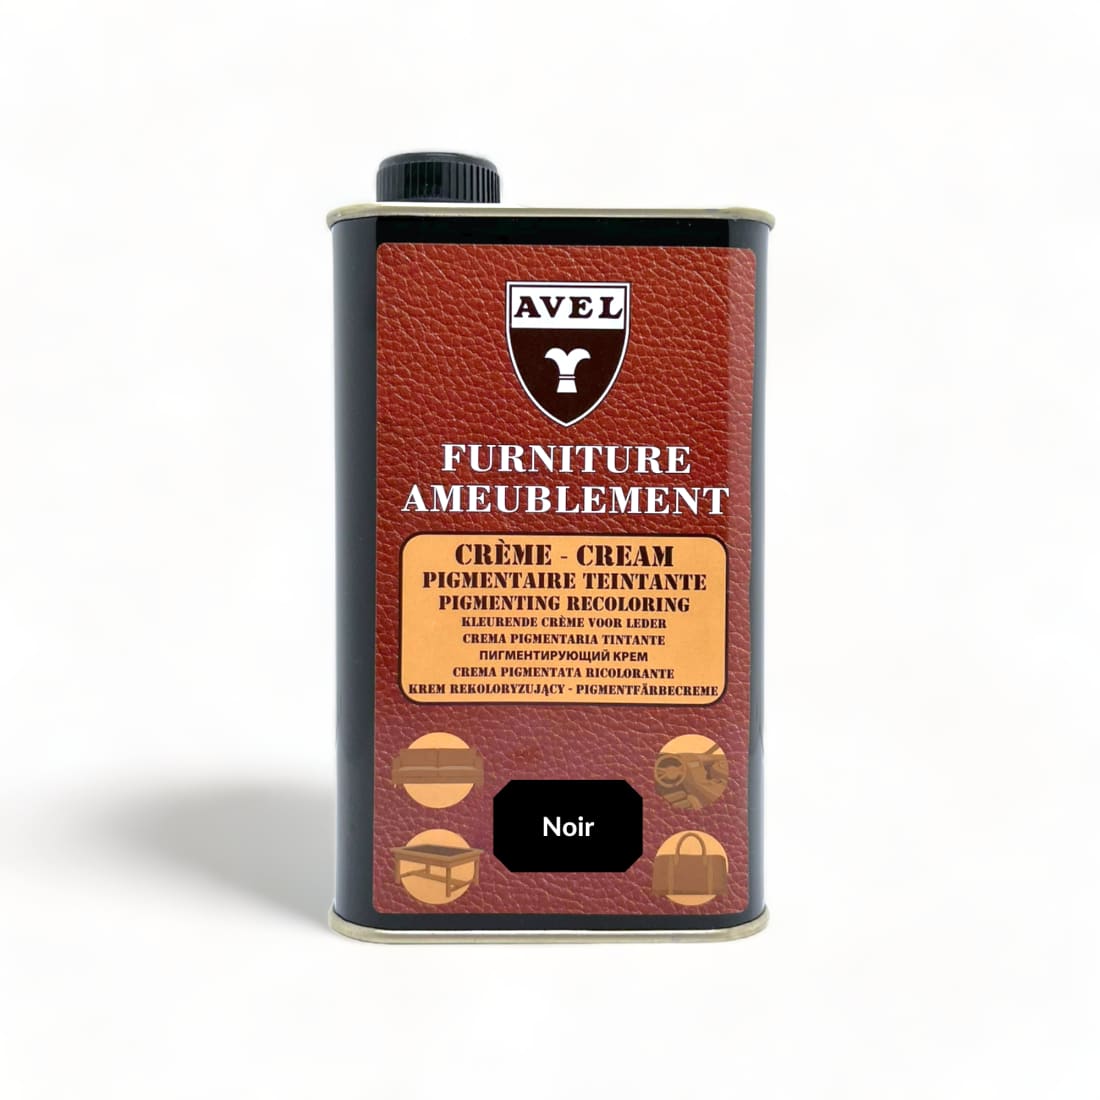 Crème Pigmentaire Teintante Noir - Avel - 375 ml -